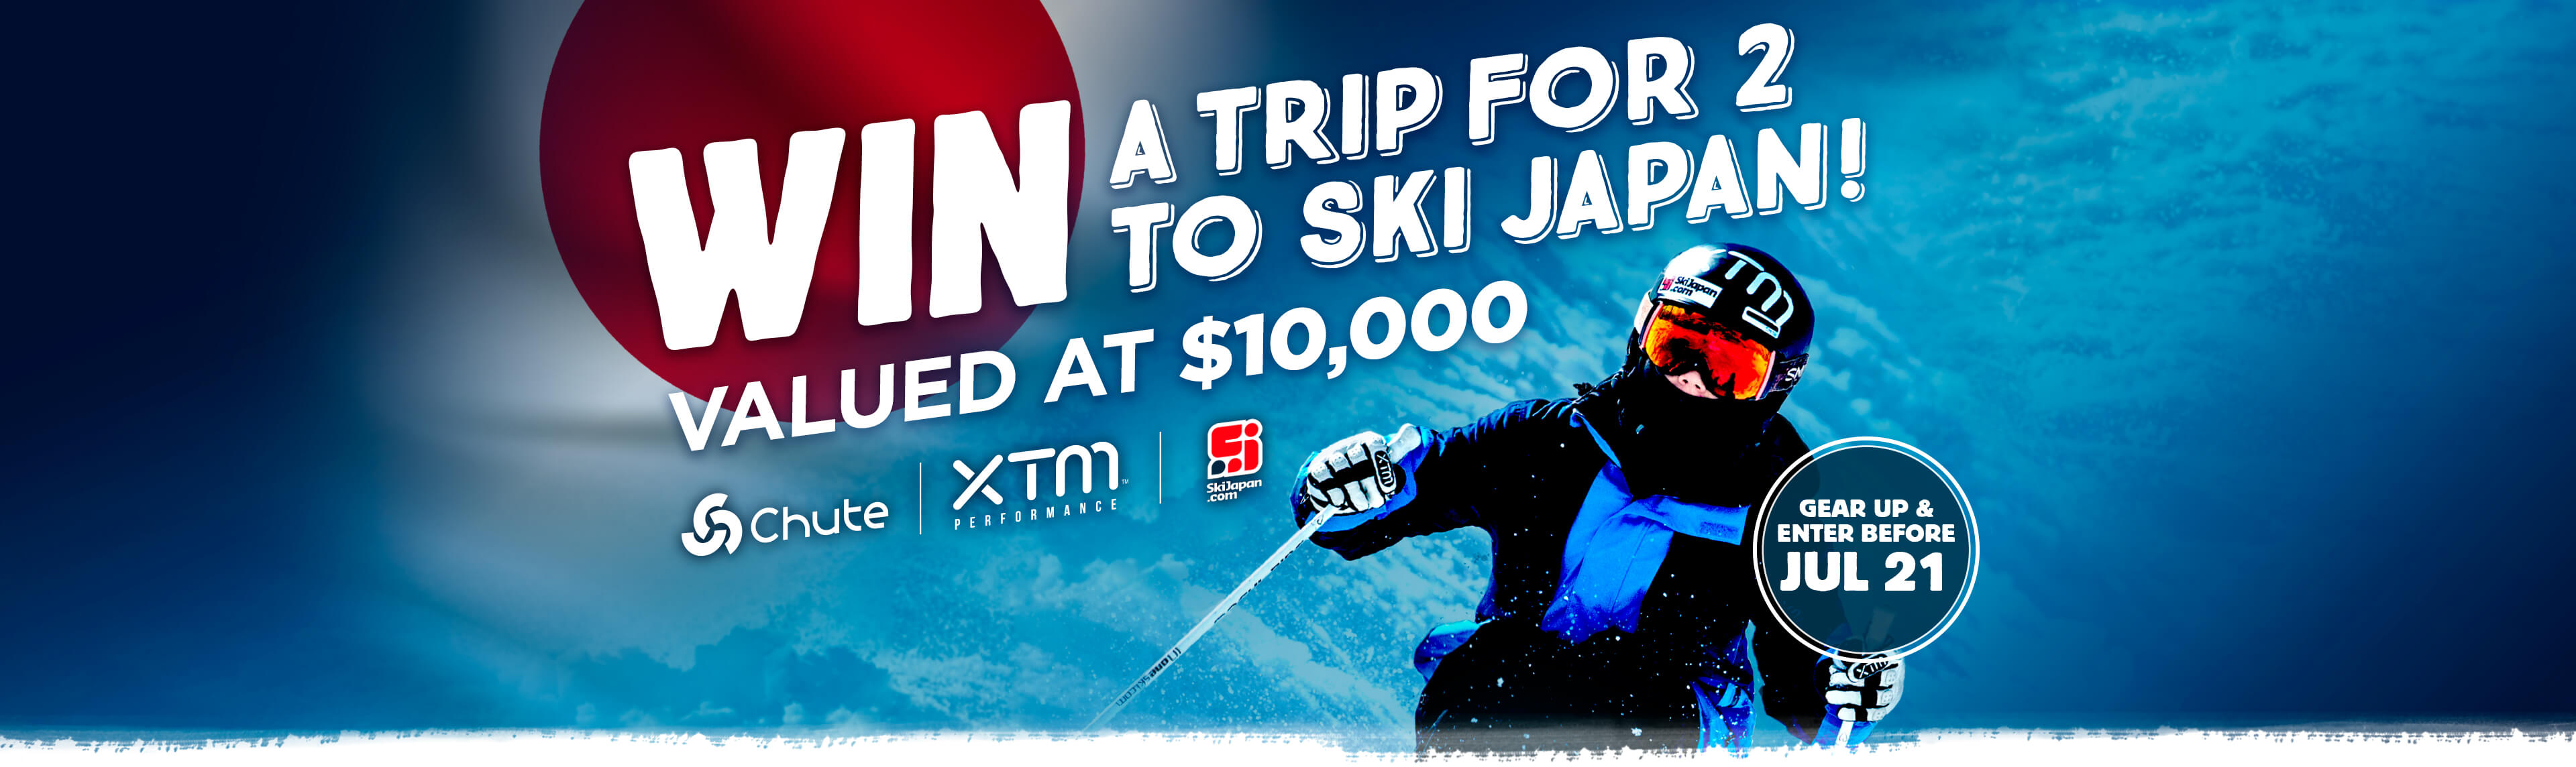 Japan Ski Trip Competition 2019